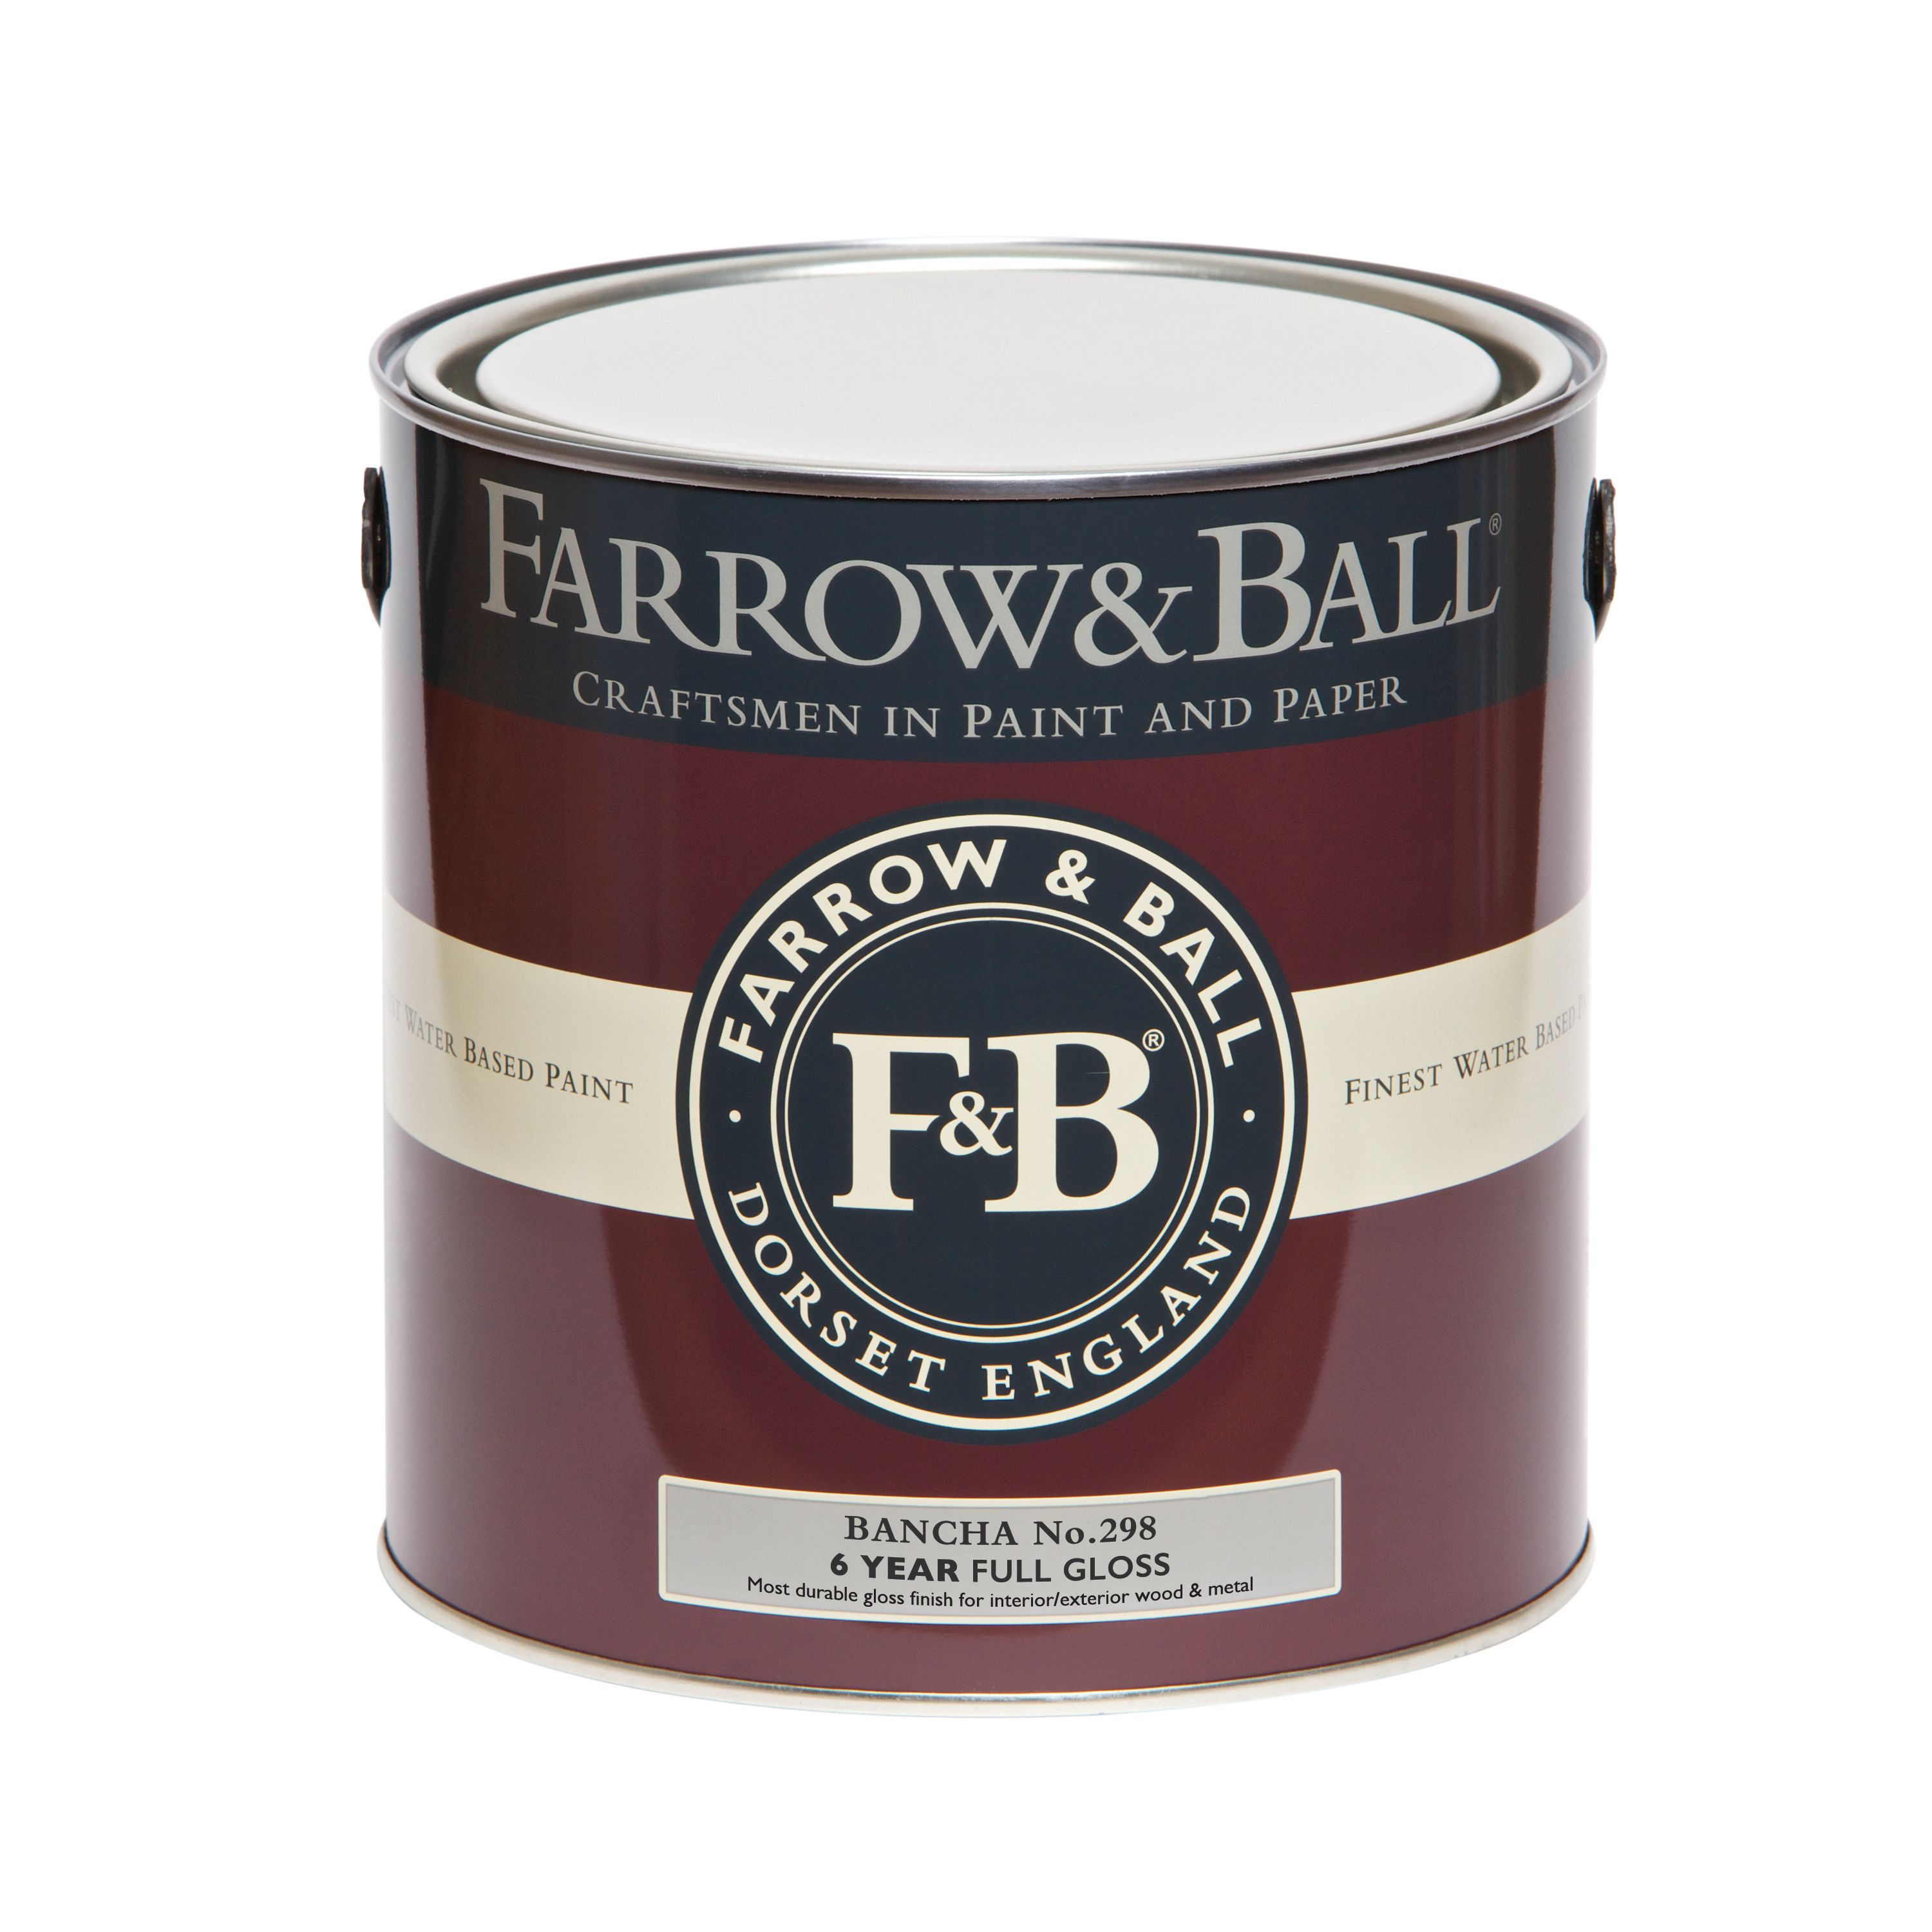 Farrow & Ball Bancha Gloss Metal & wood paint, 2.5L